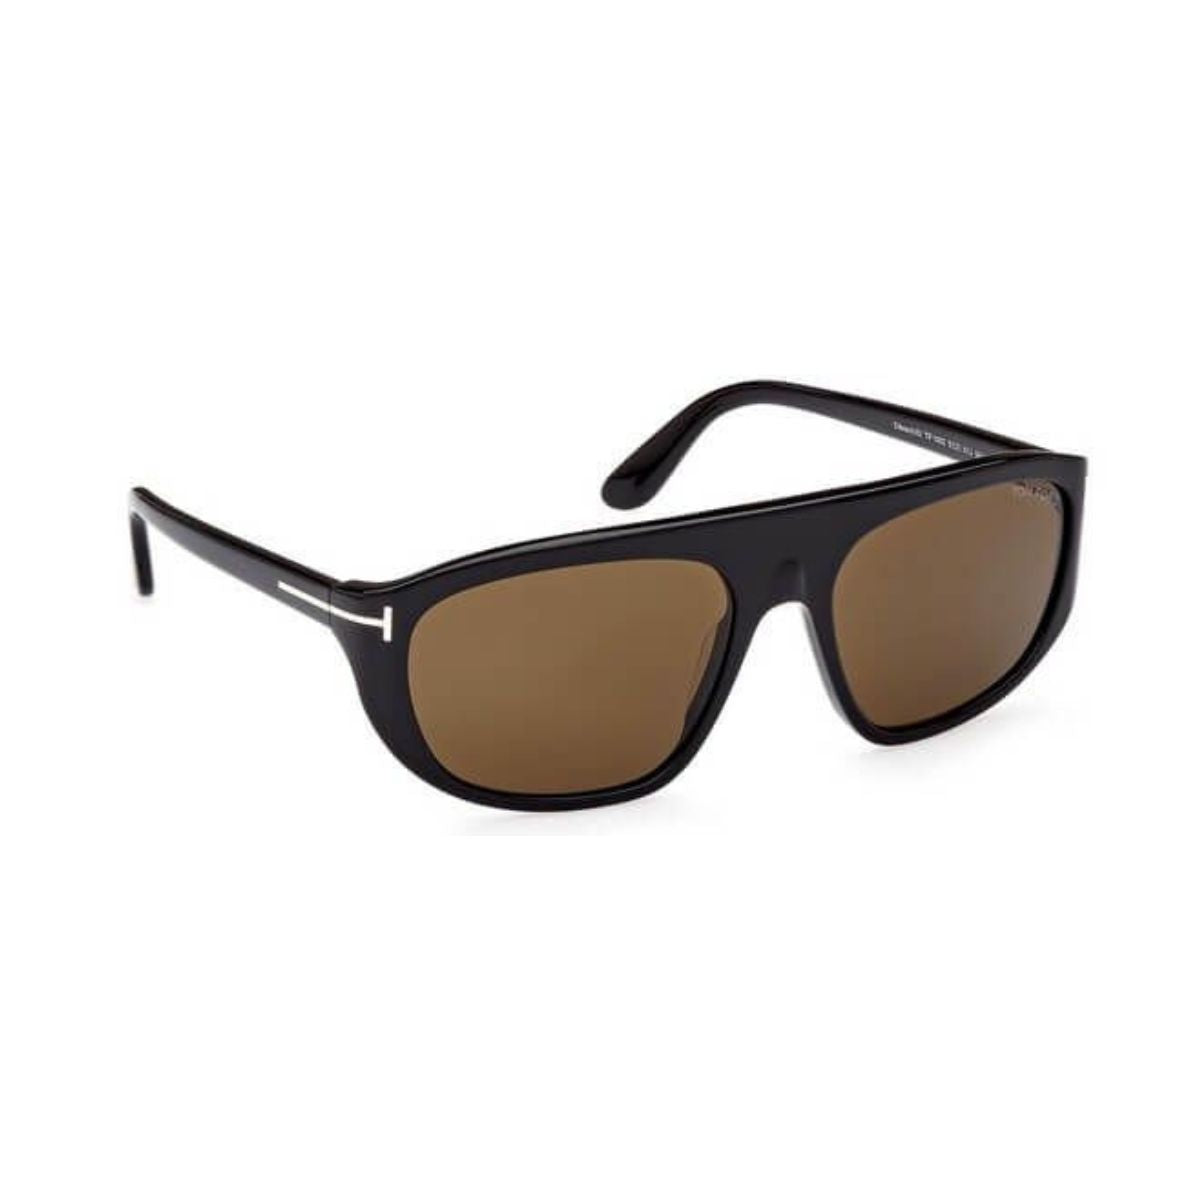 "Tomford Aviator Sunglasses For Mens At Optorium"